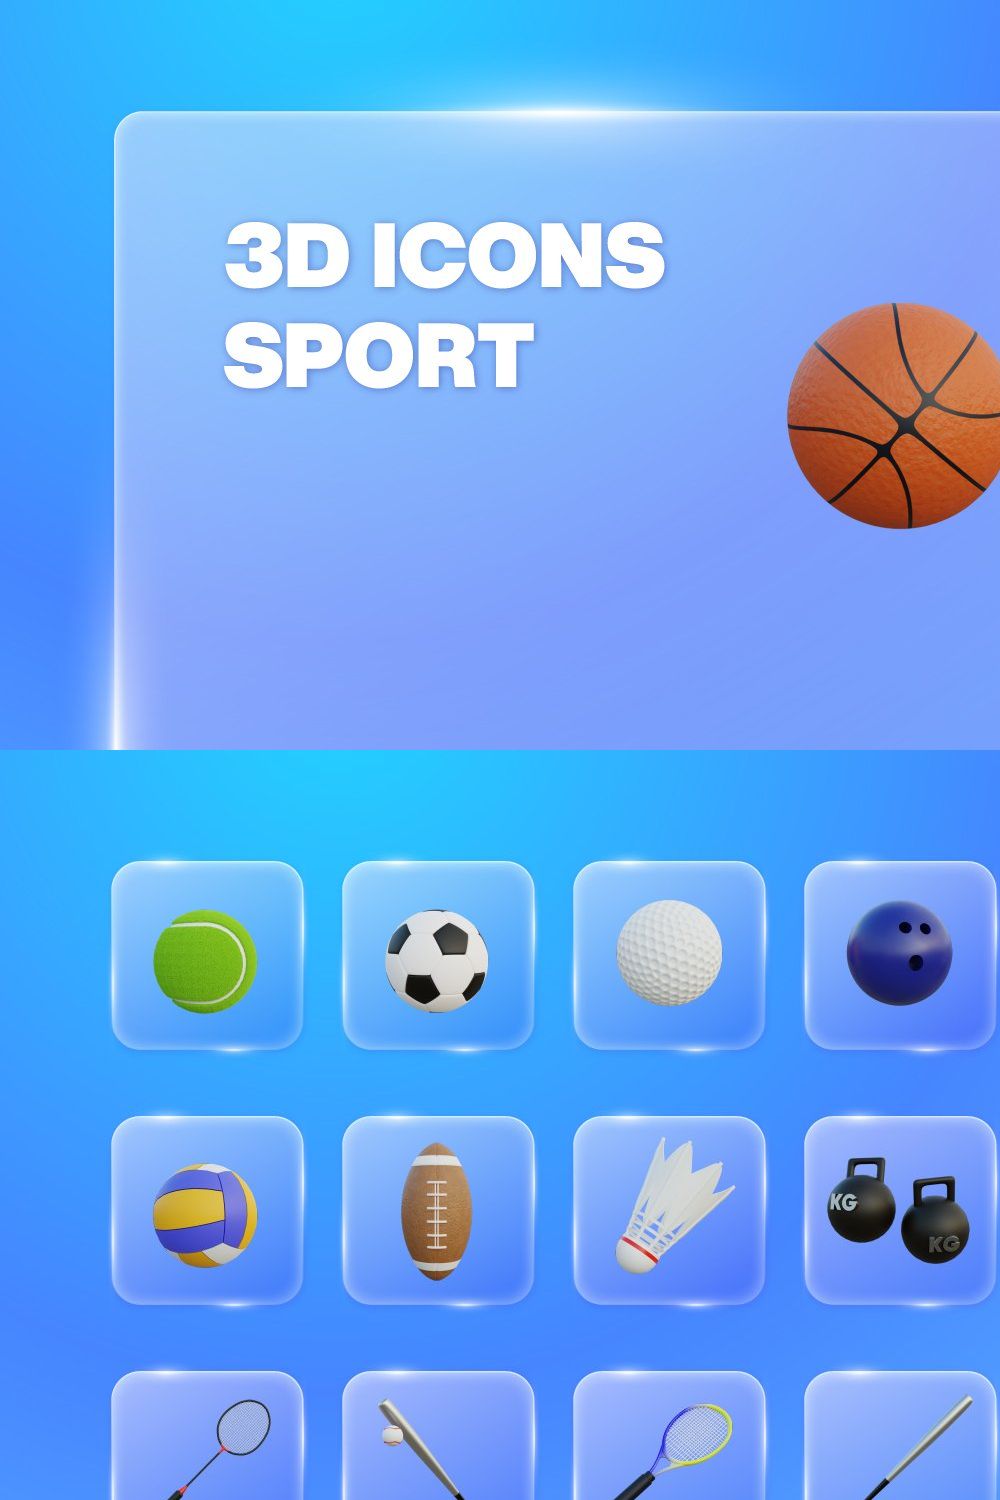 3D Icons Sport pinterest preview image.